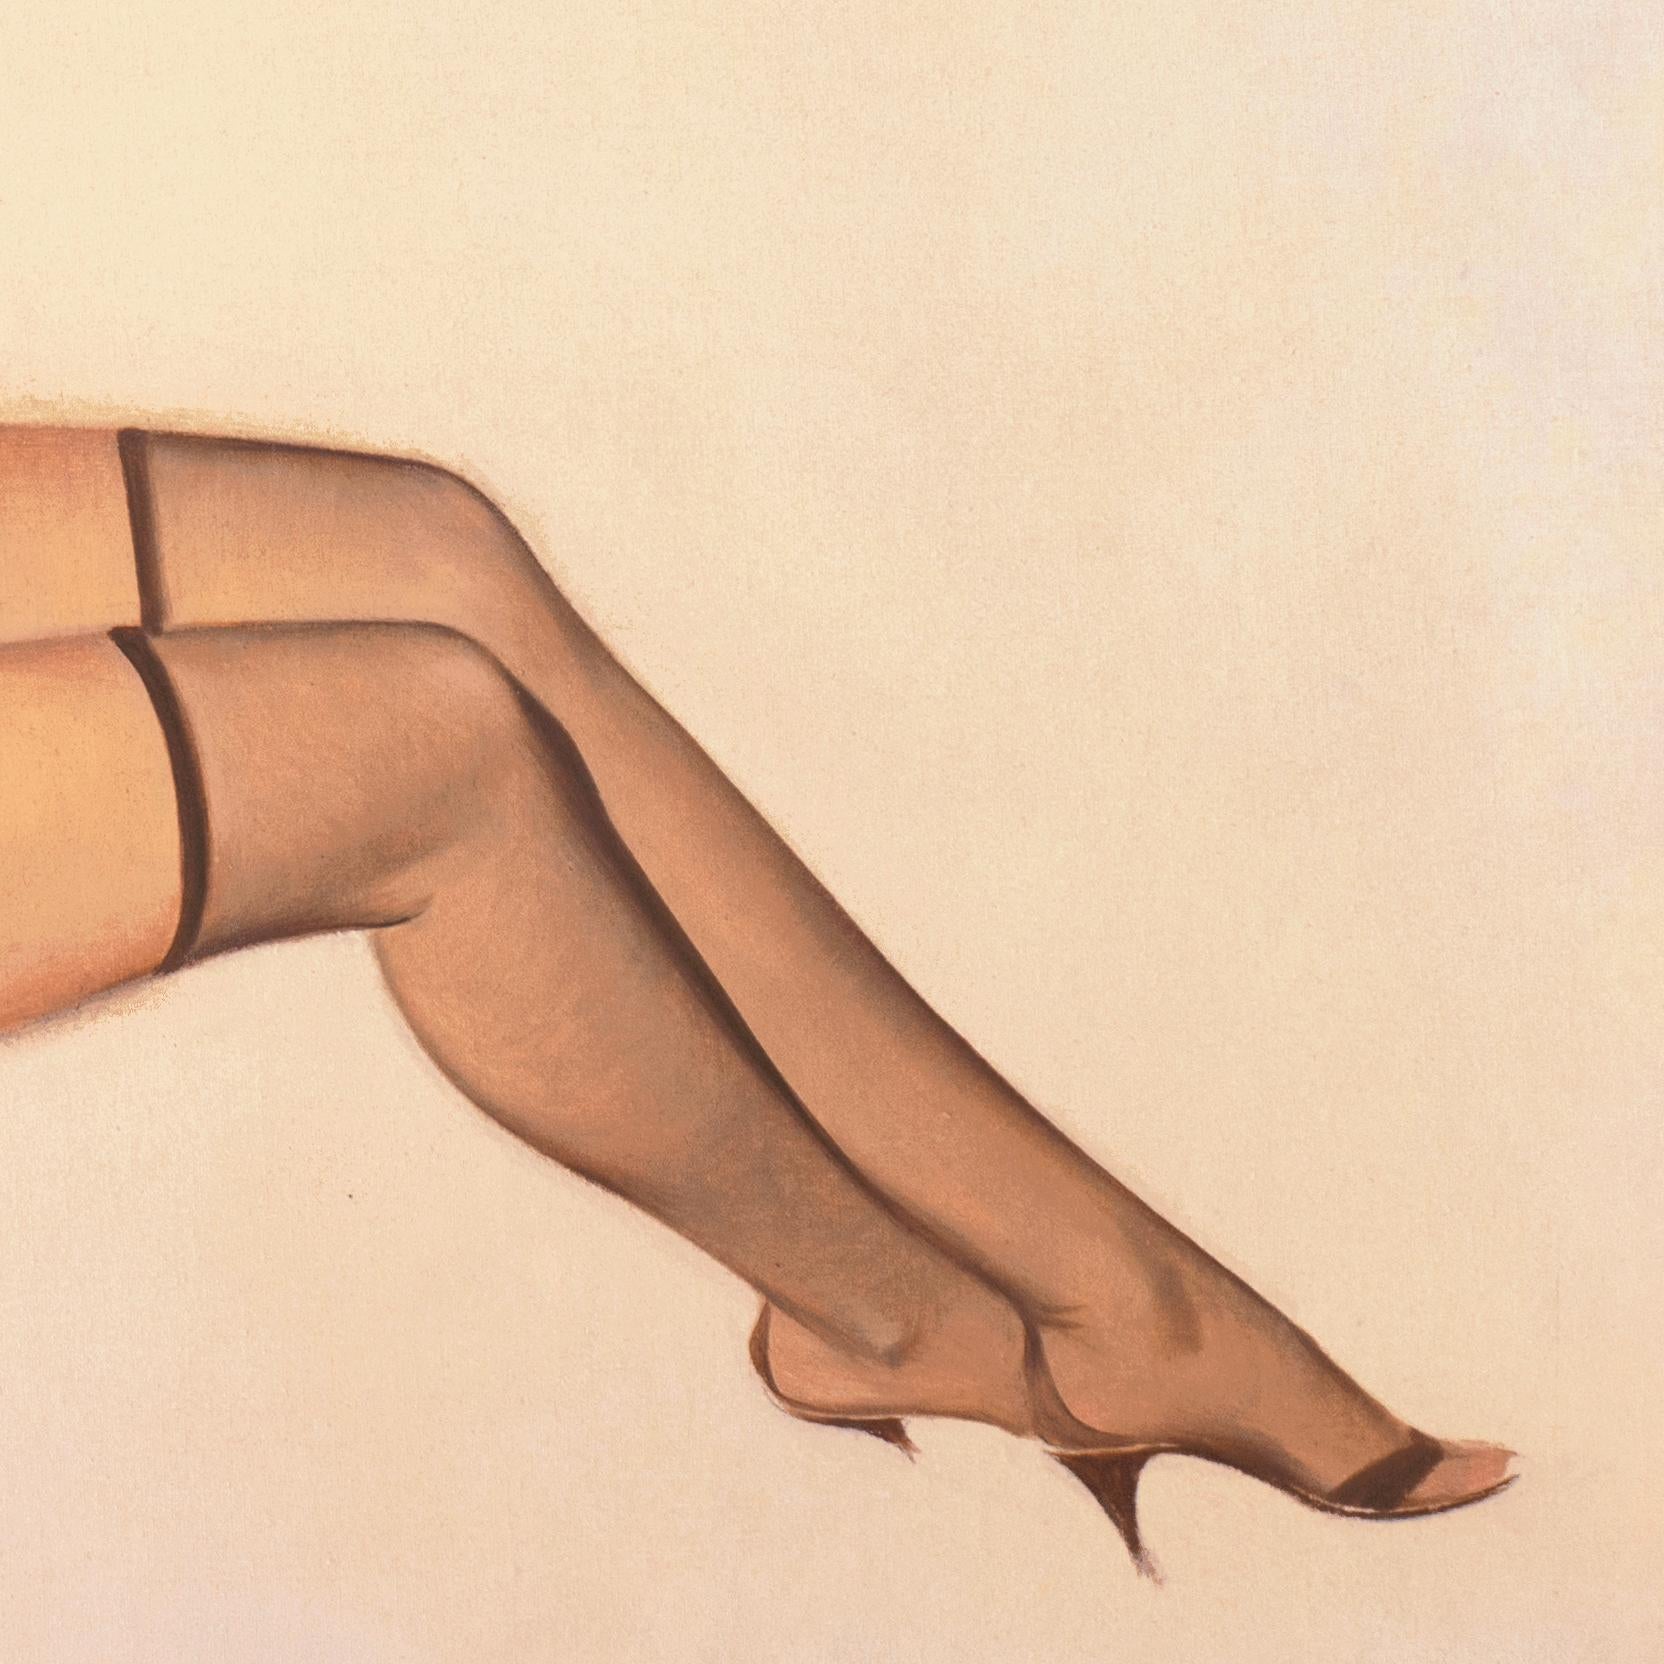 'Venus in Furs', American Pin-Up Illustration, Nude, Leopold von Sacher-Masoch 1